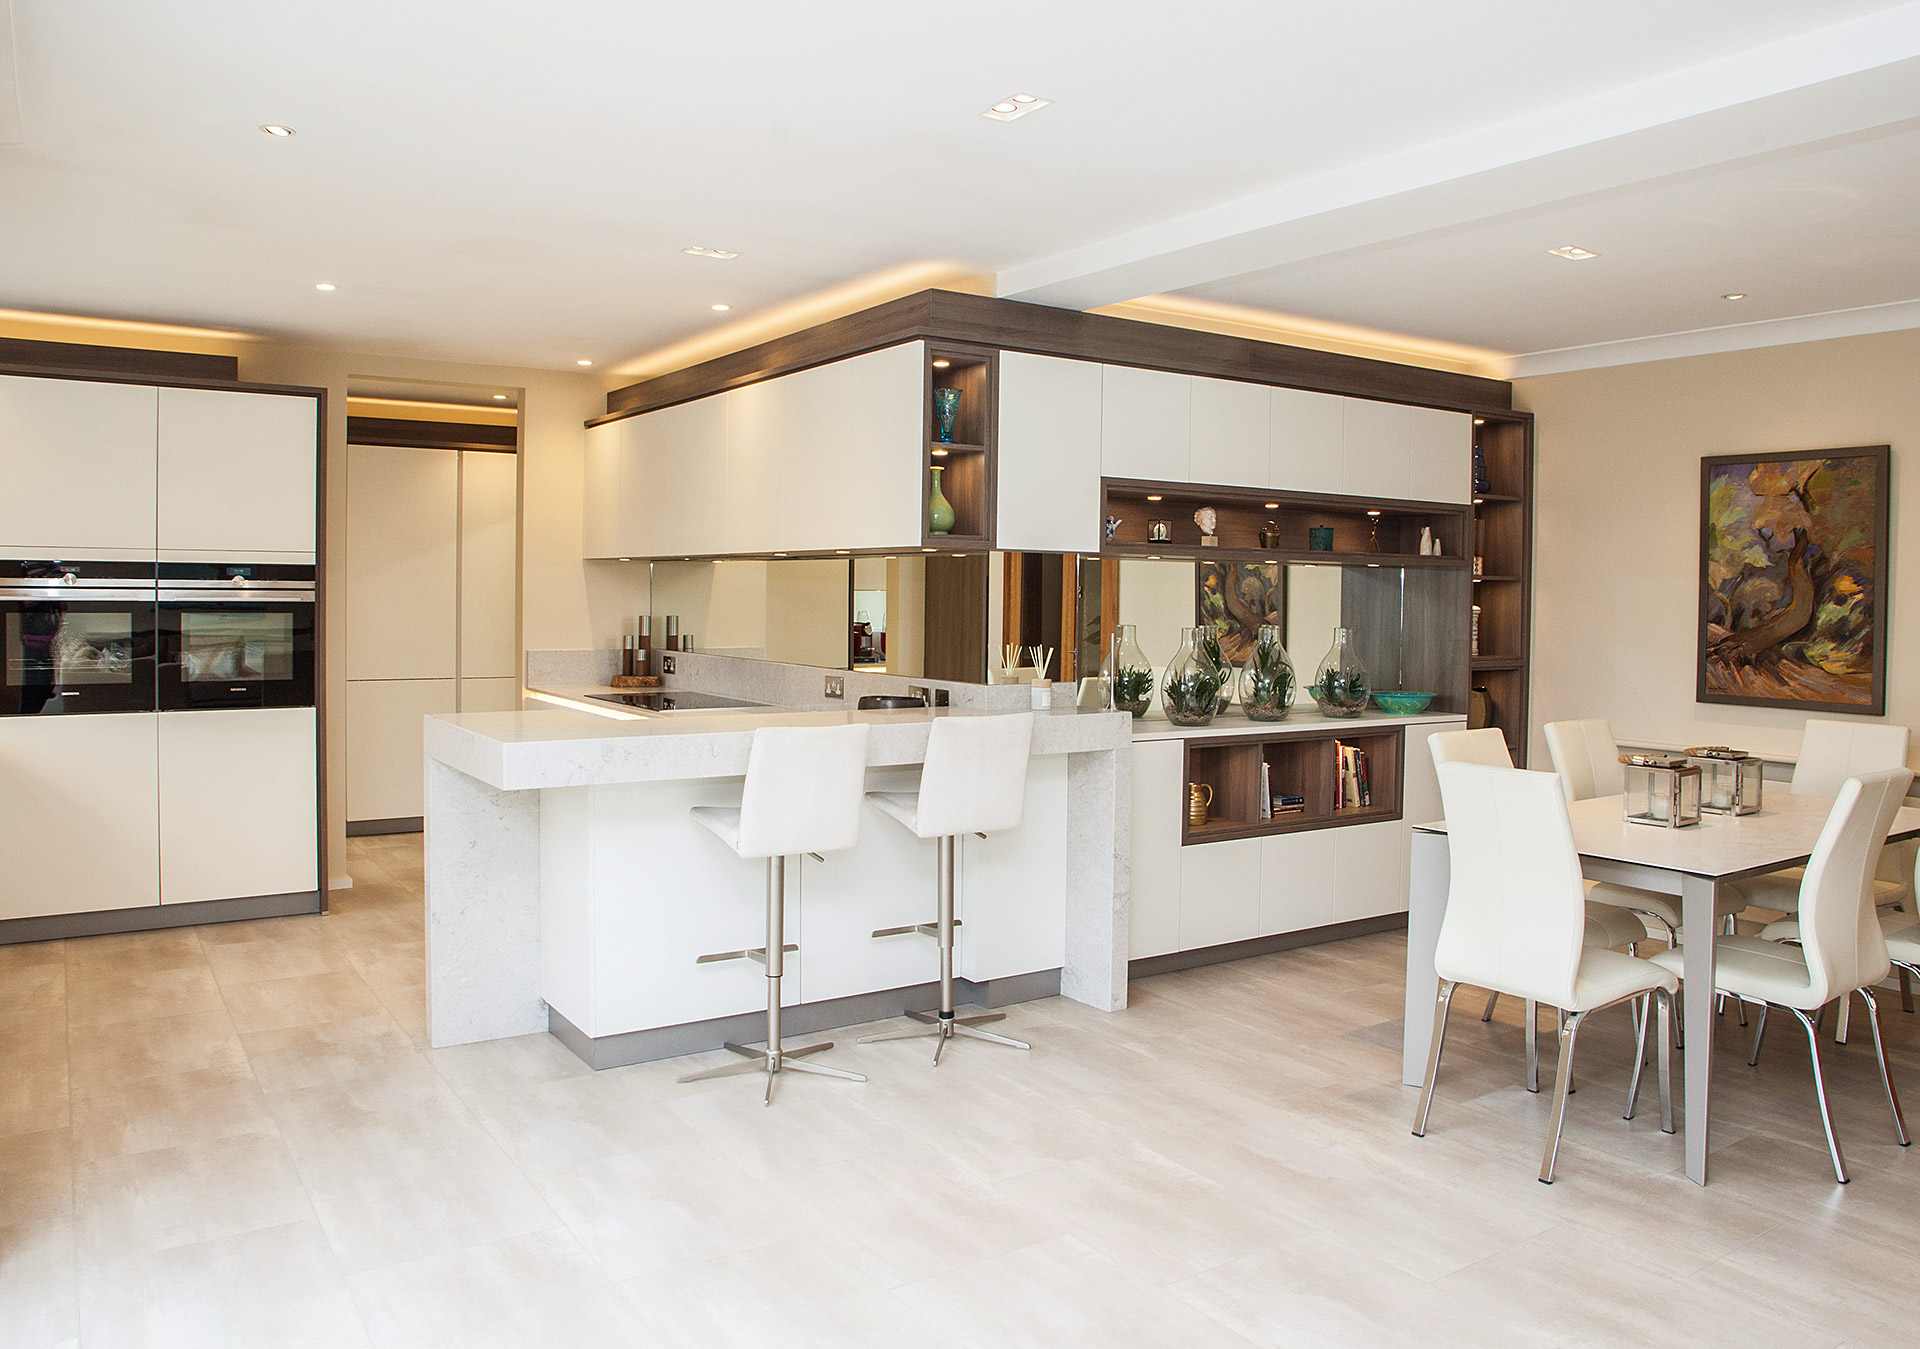 White lacquered Hacker kitchen, with dark pine accents, breakfast bar and Siemens appliances